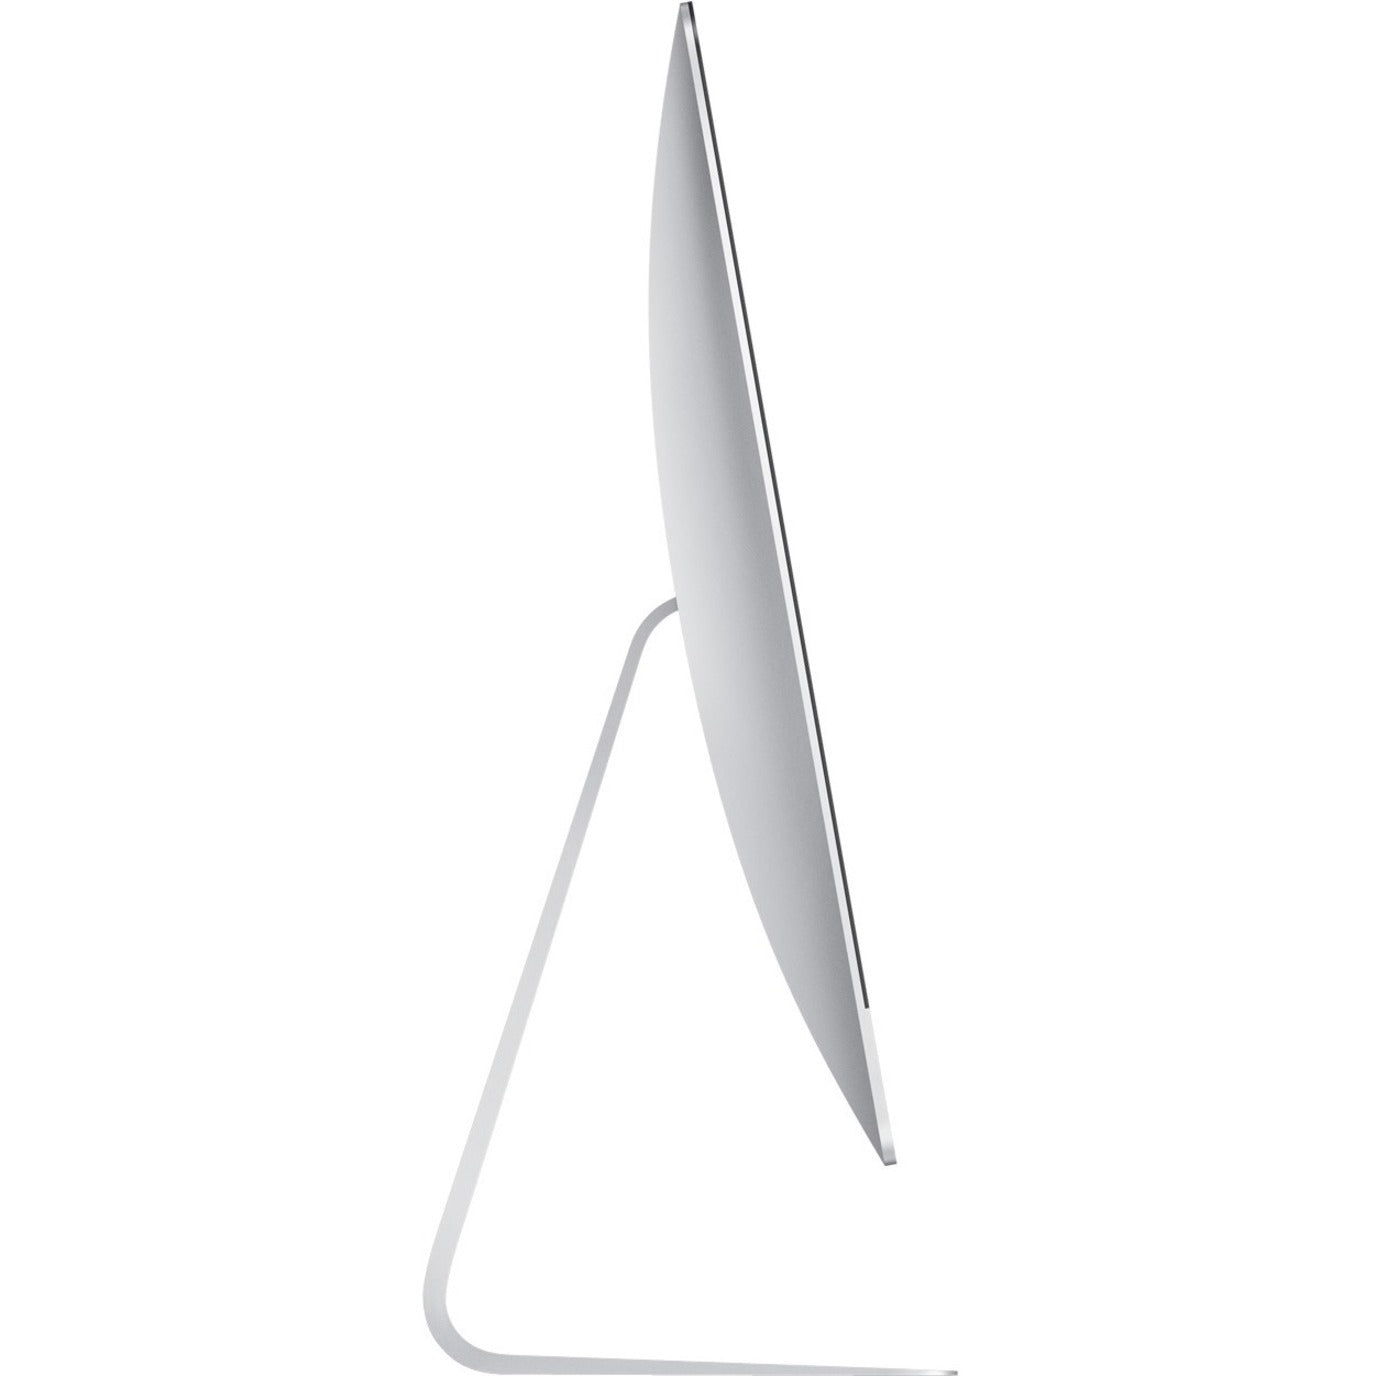 Apple MRQY2LL/A 27-inch iMac with Retina 5K Display, Core i5, 8GB RAM, 1TB Storage